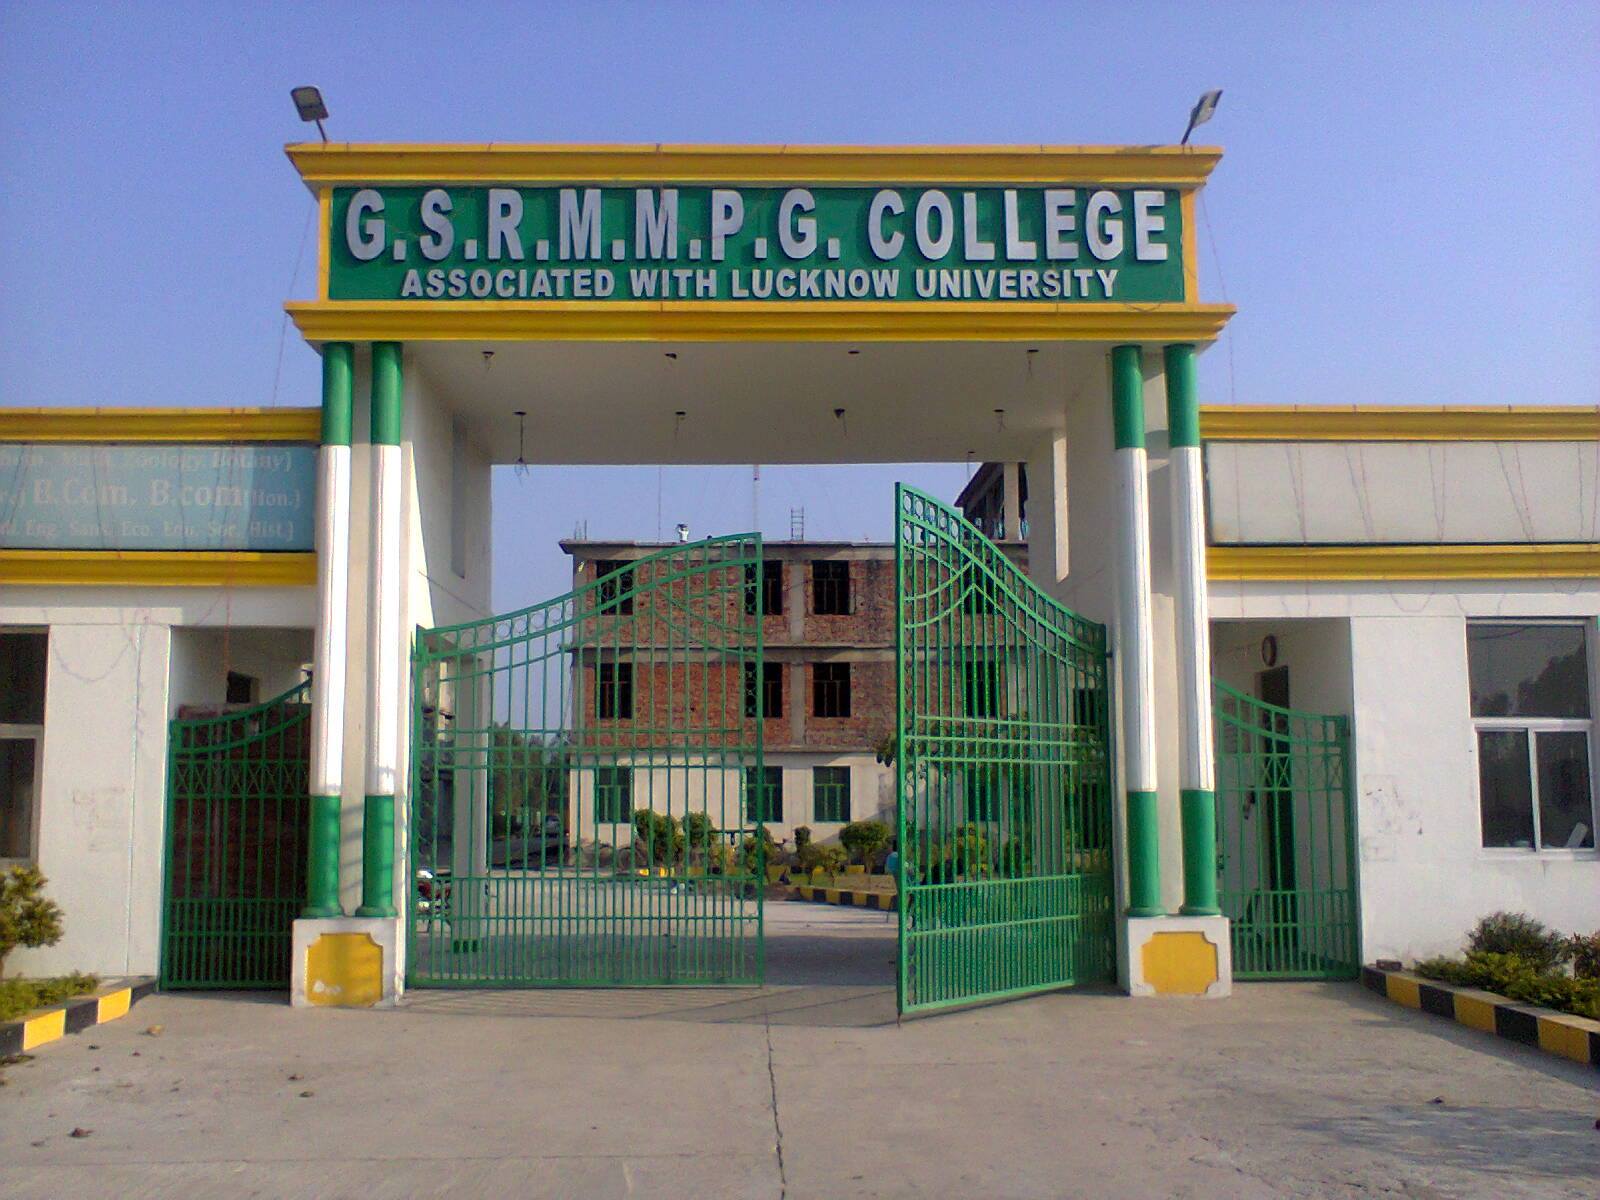 GSRM Memorial PG College, Lucknow Image